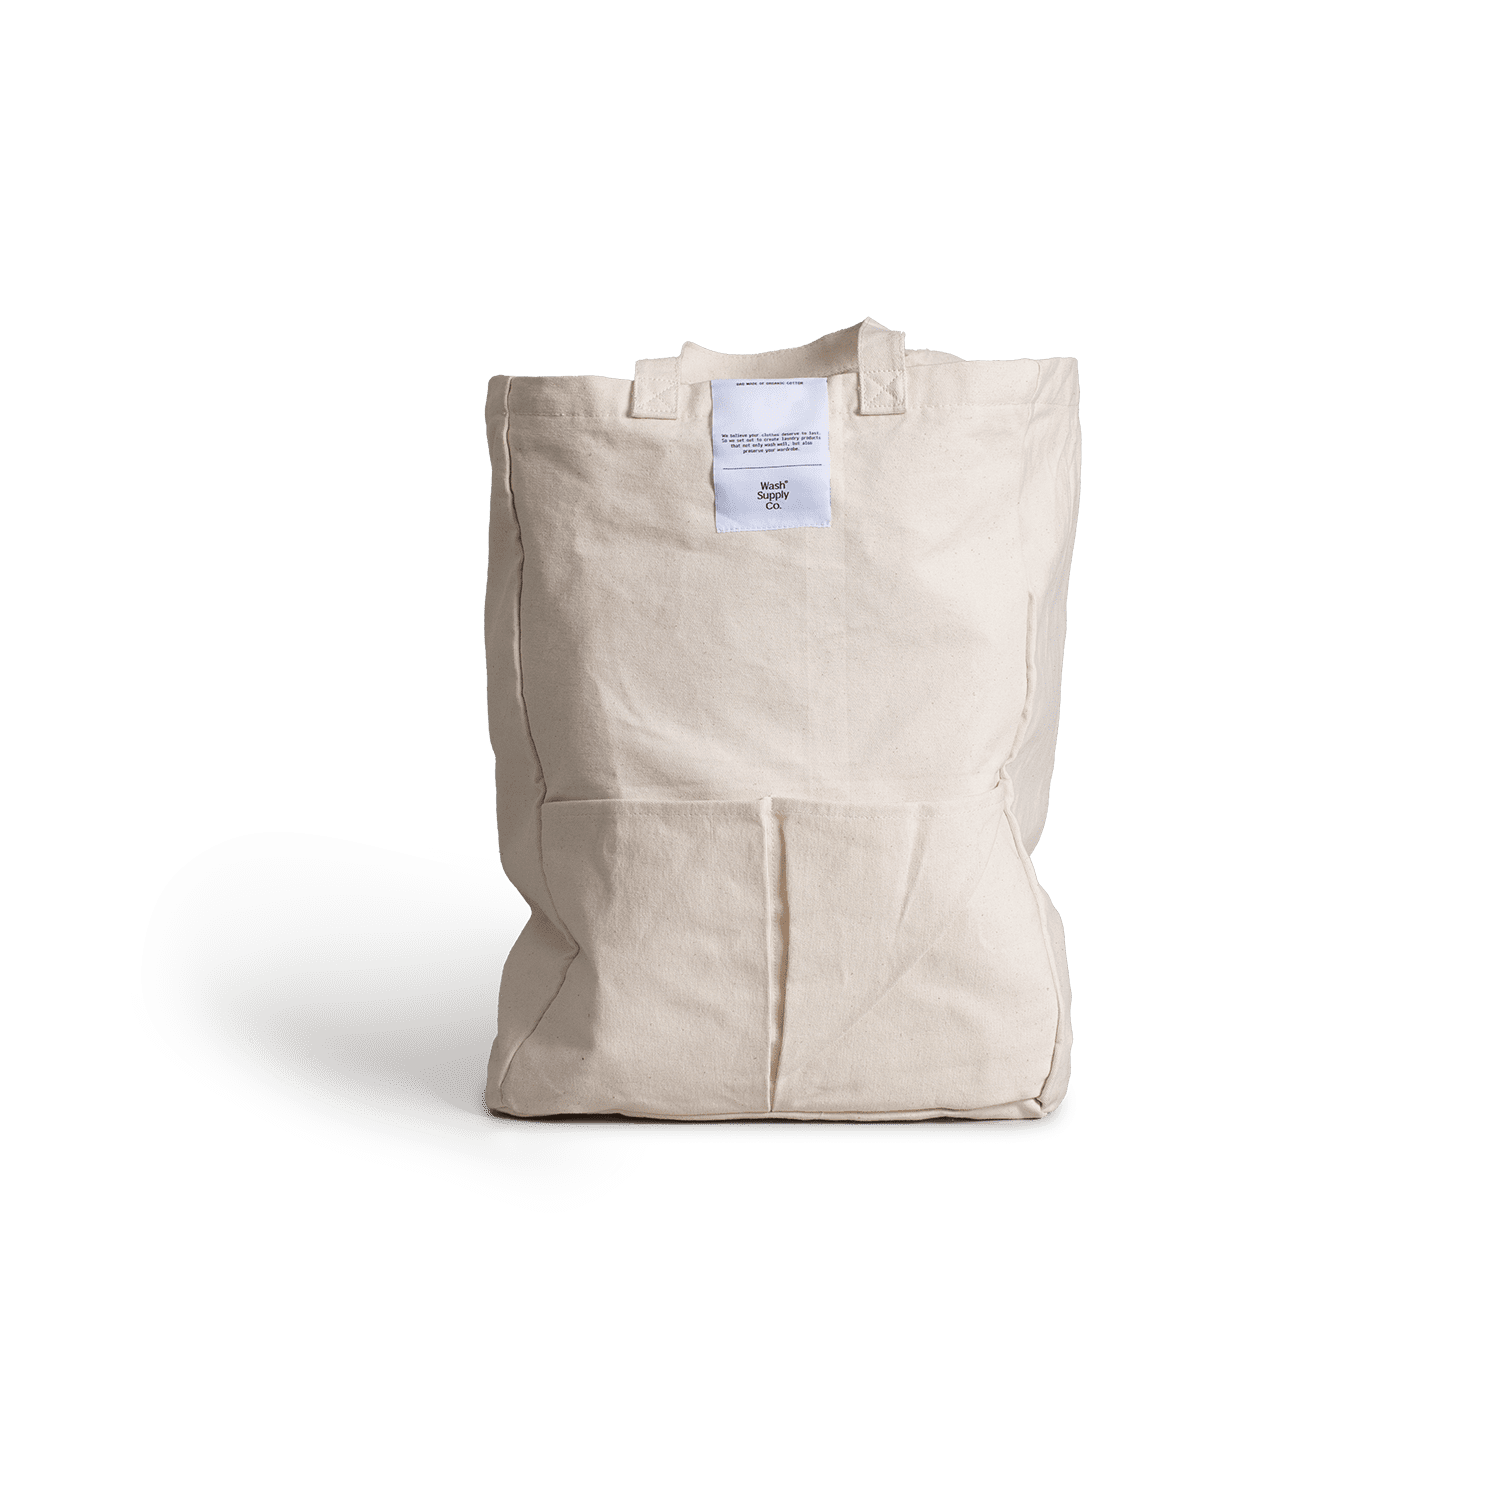 Wash supply organic cotton bag.